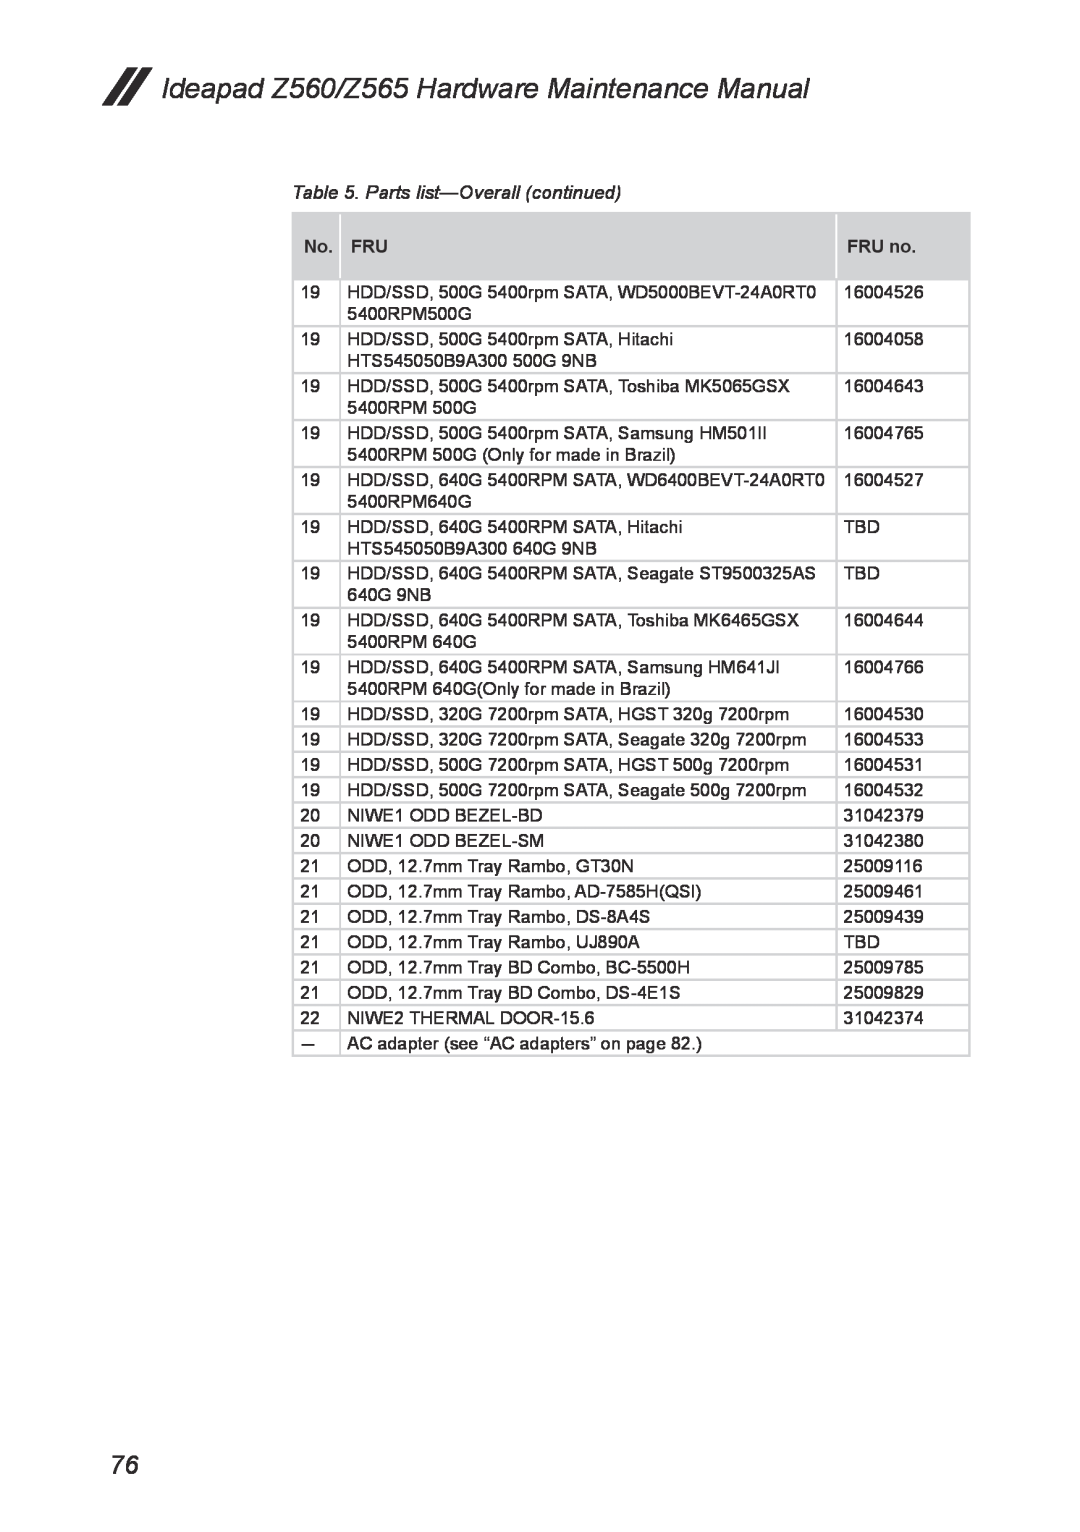 Lenovo manual Ideapad Z560/Z565 Hardware Maintenance Manual, Parts list-Overall continued 